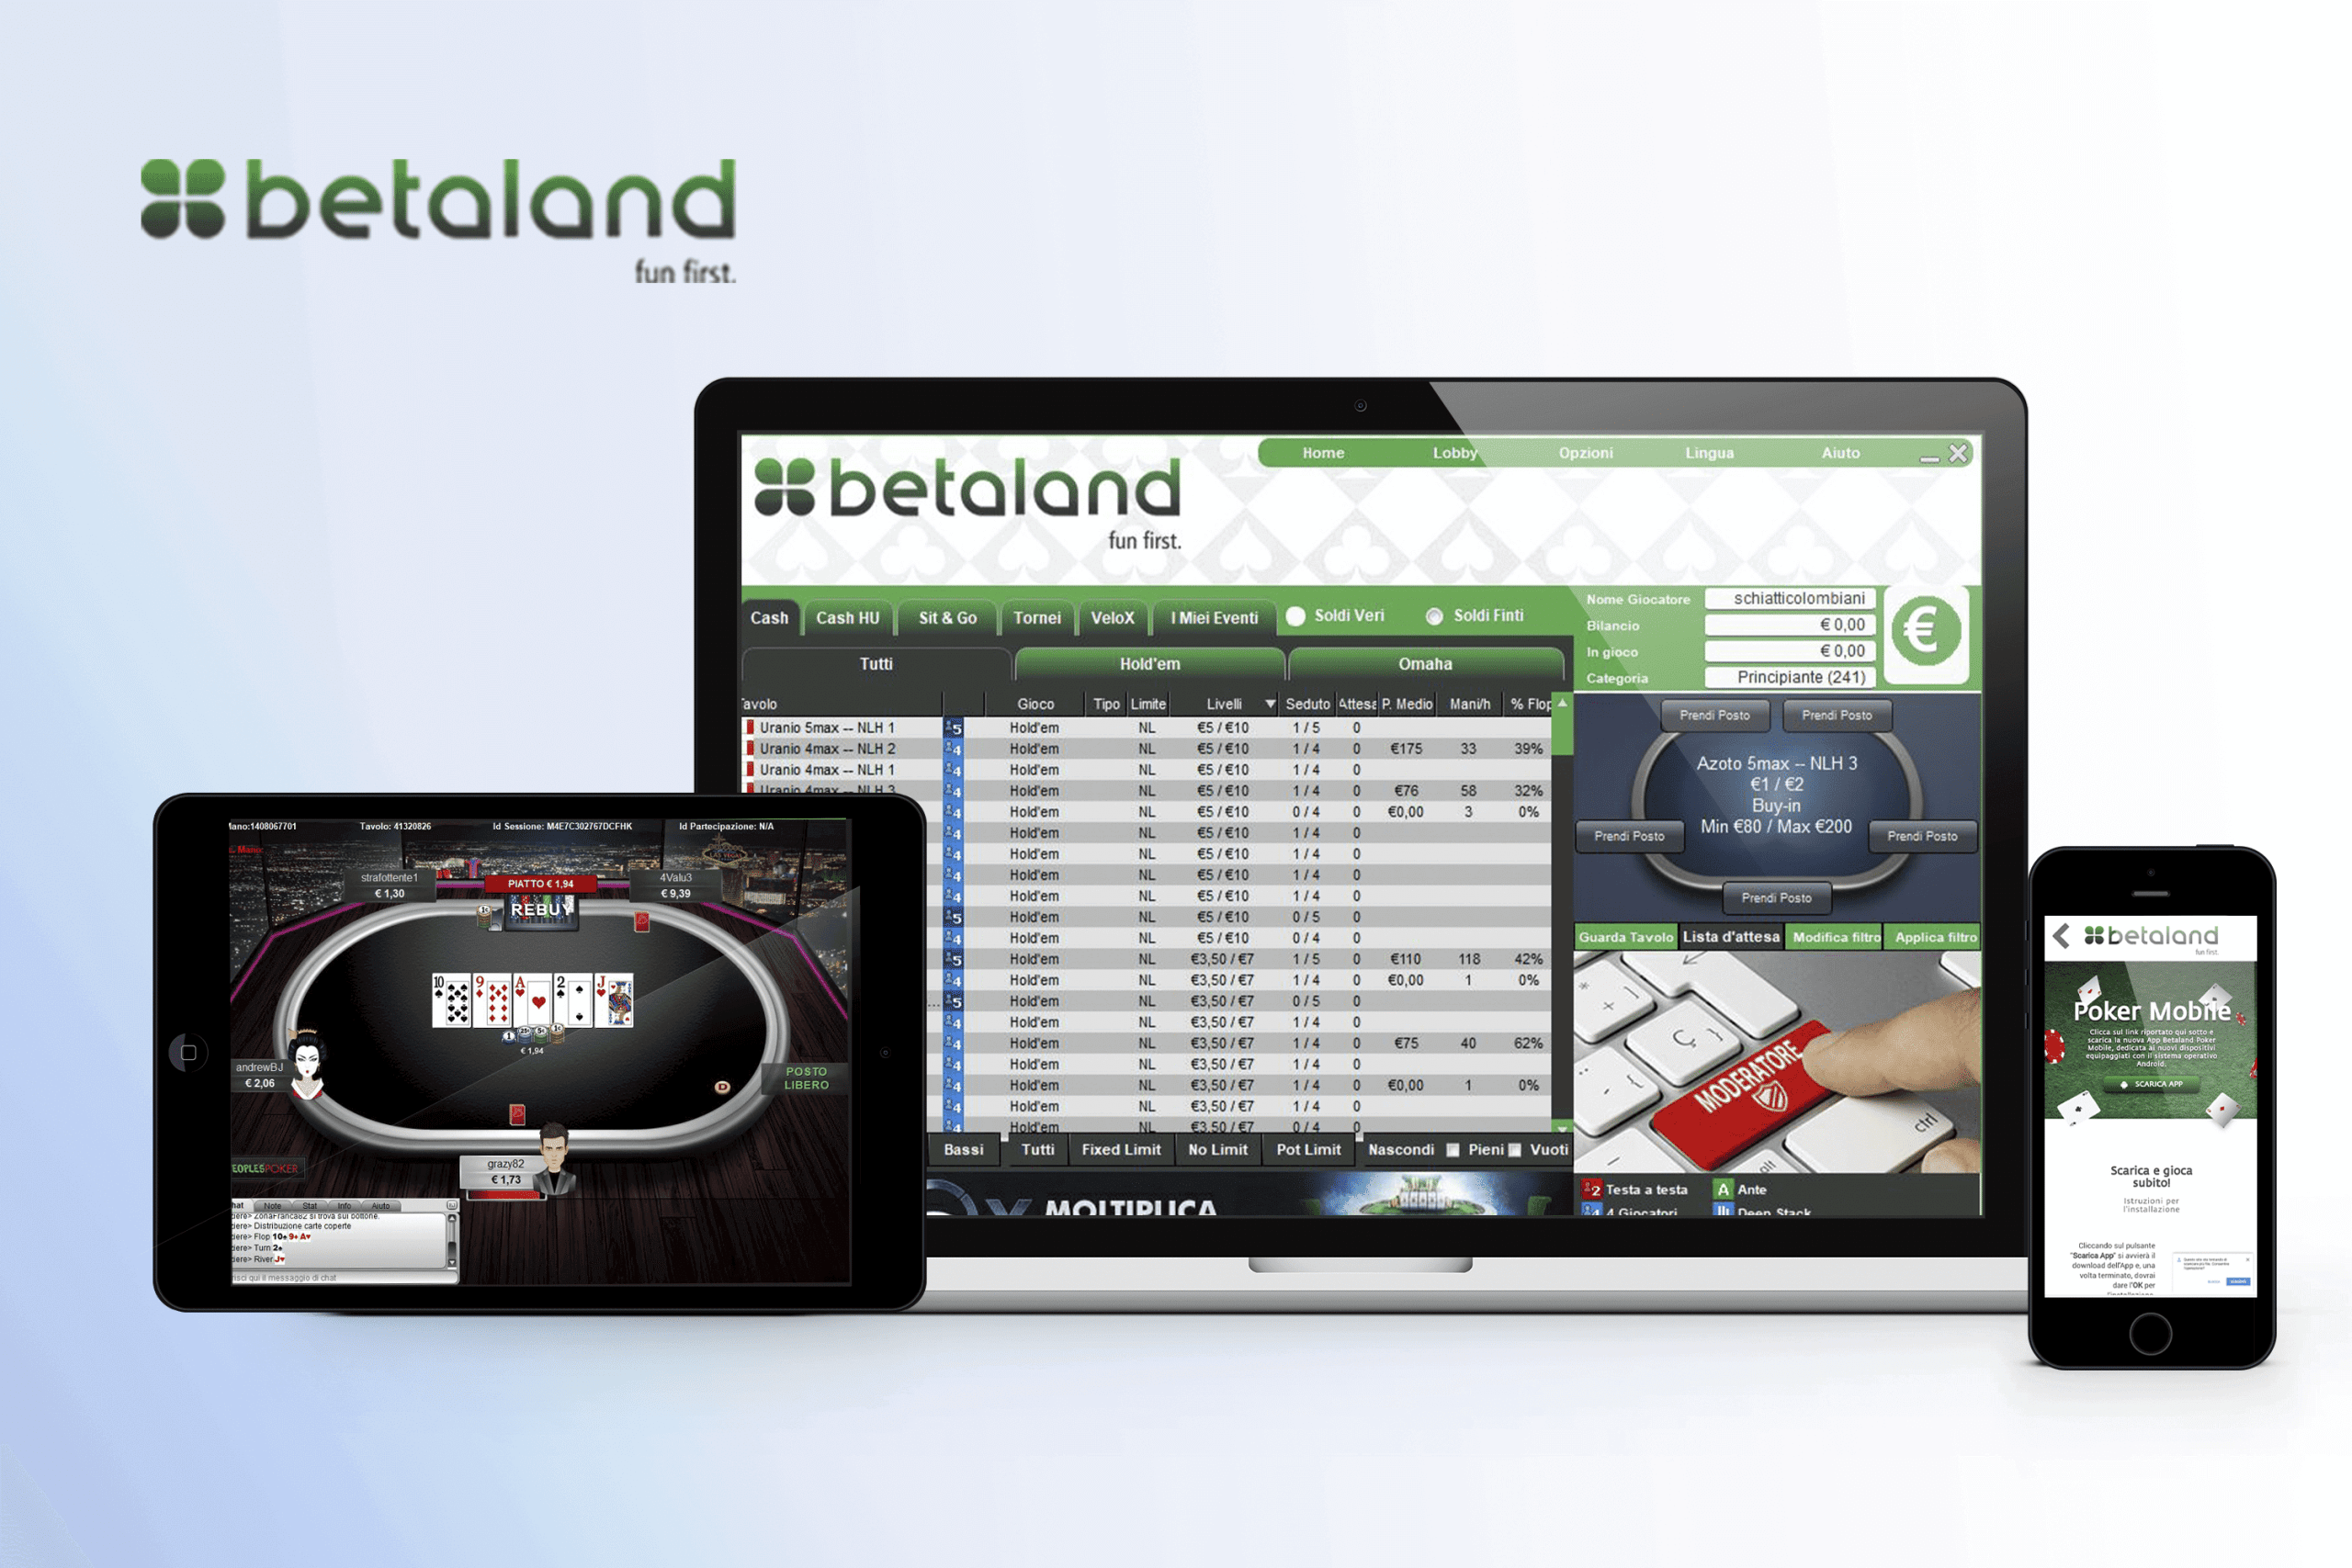 Betaland Poker mobile